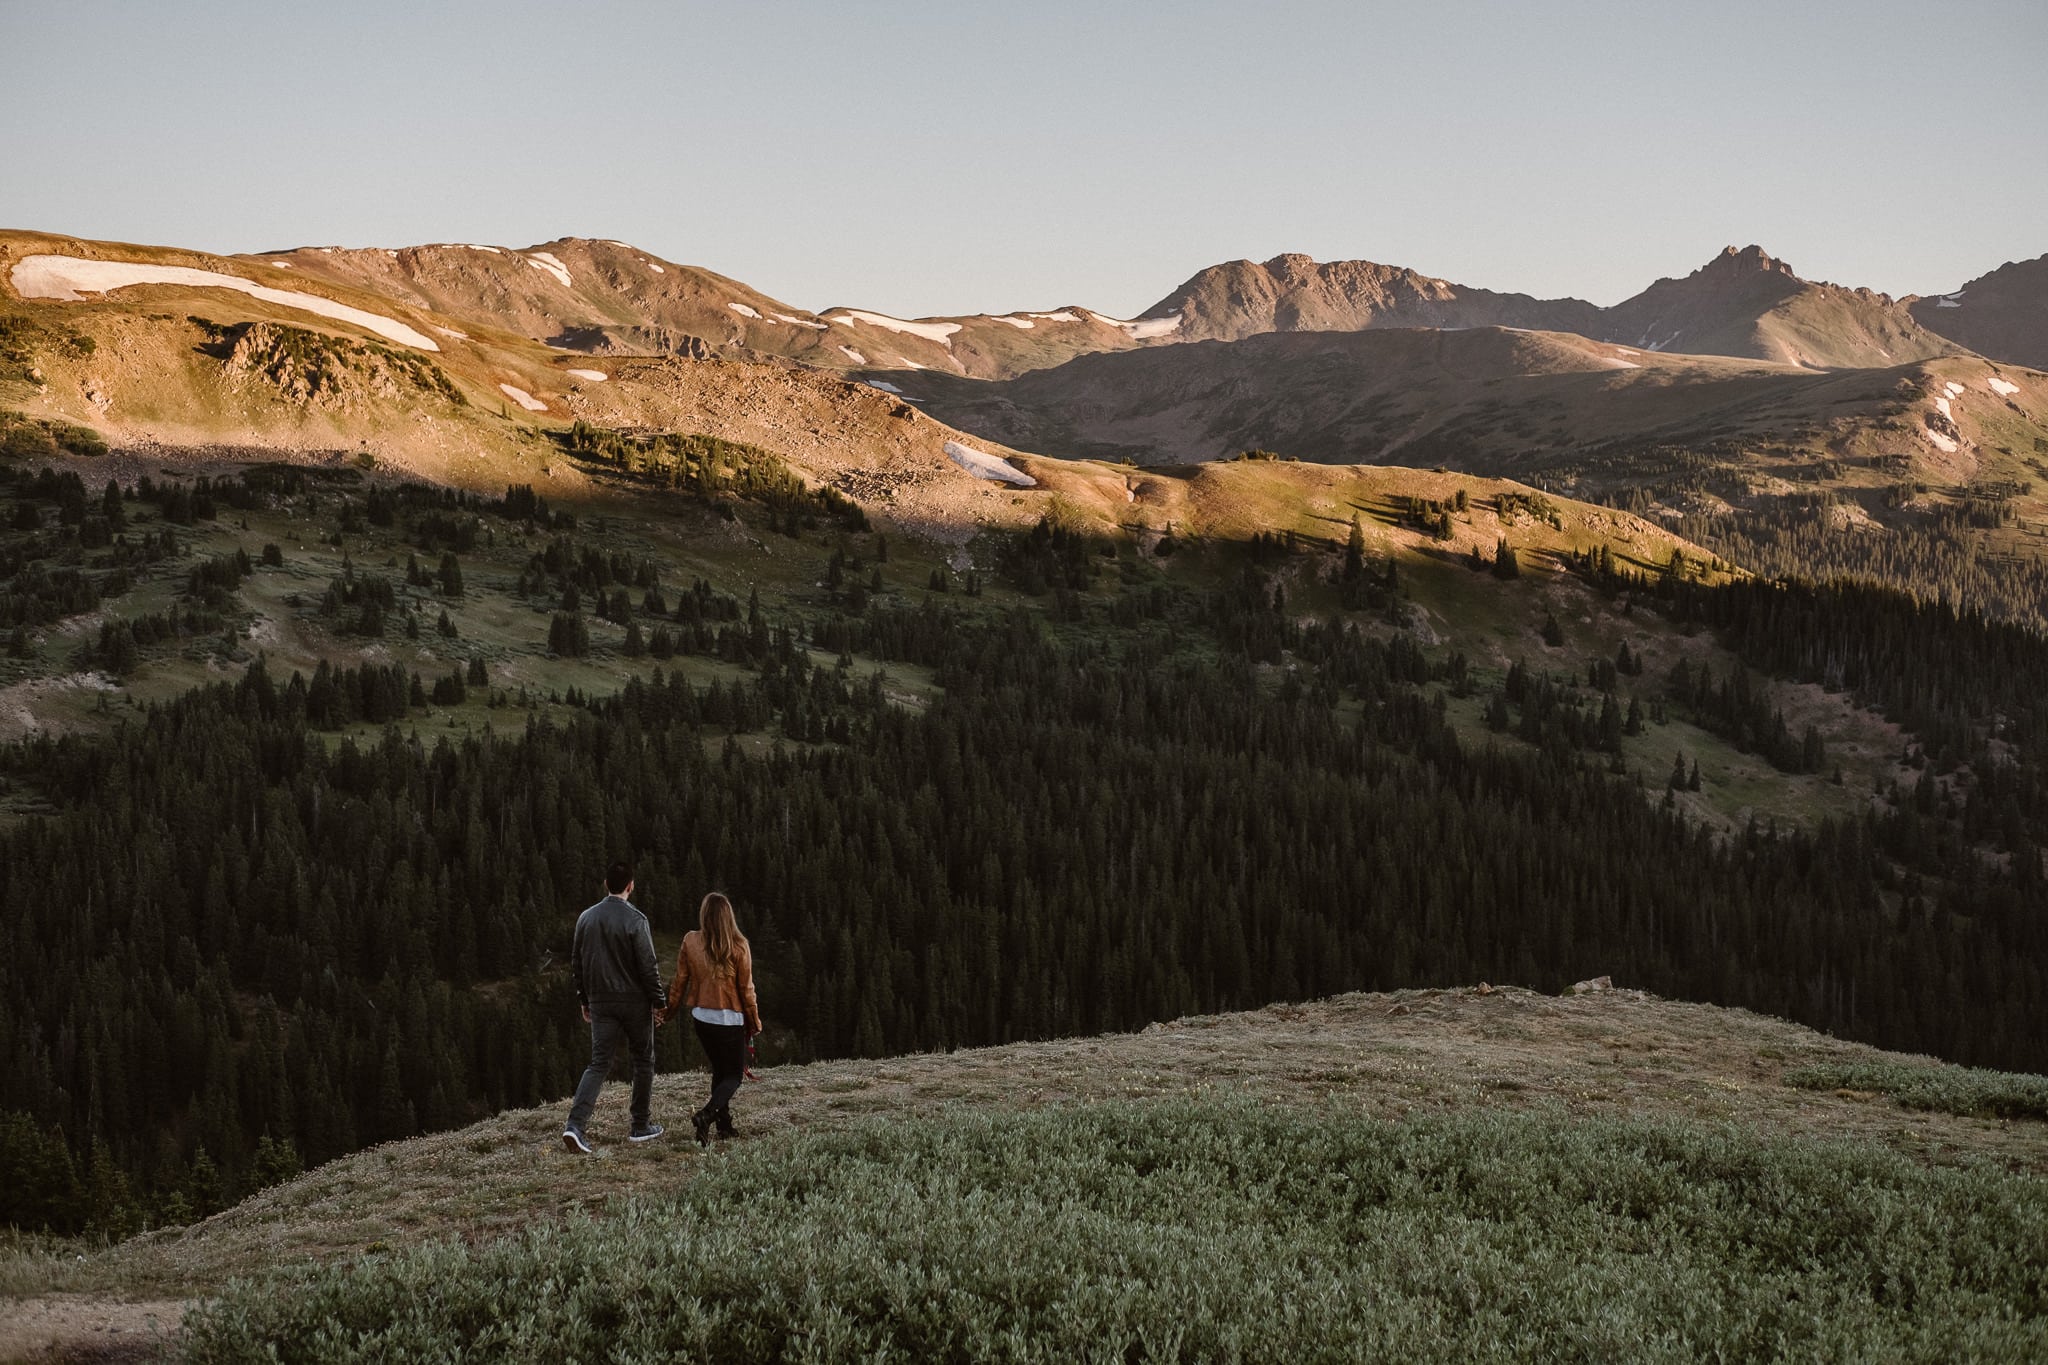 Colorado adventure engagement photography, Loveland Pass engagement, Summit County wedding photographer